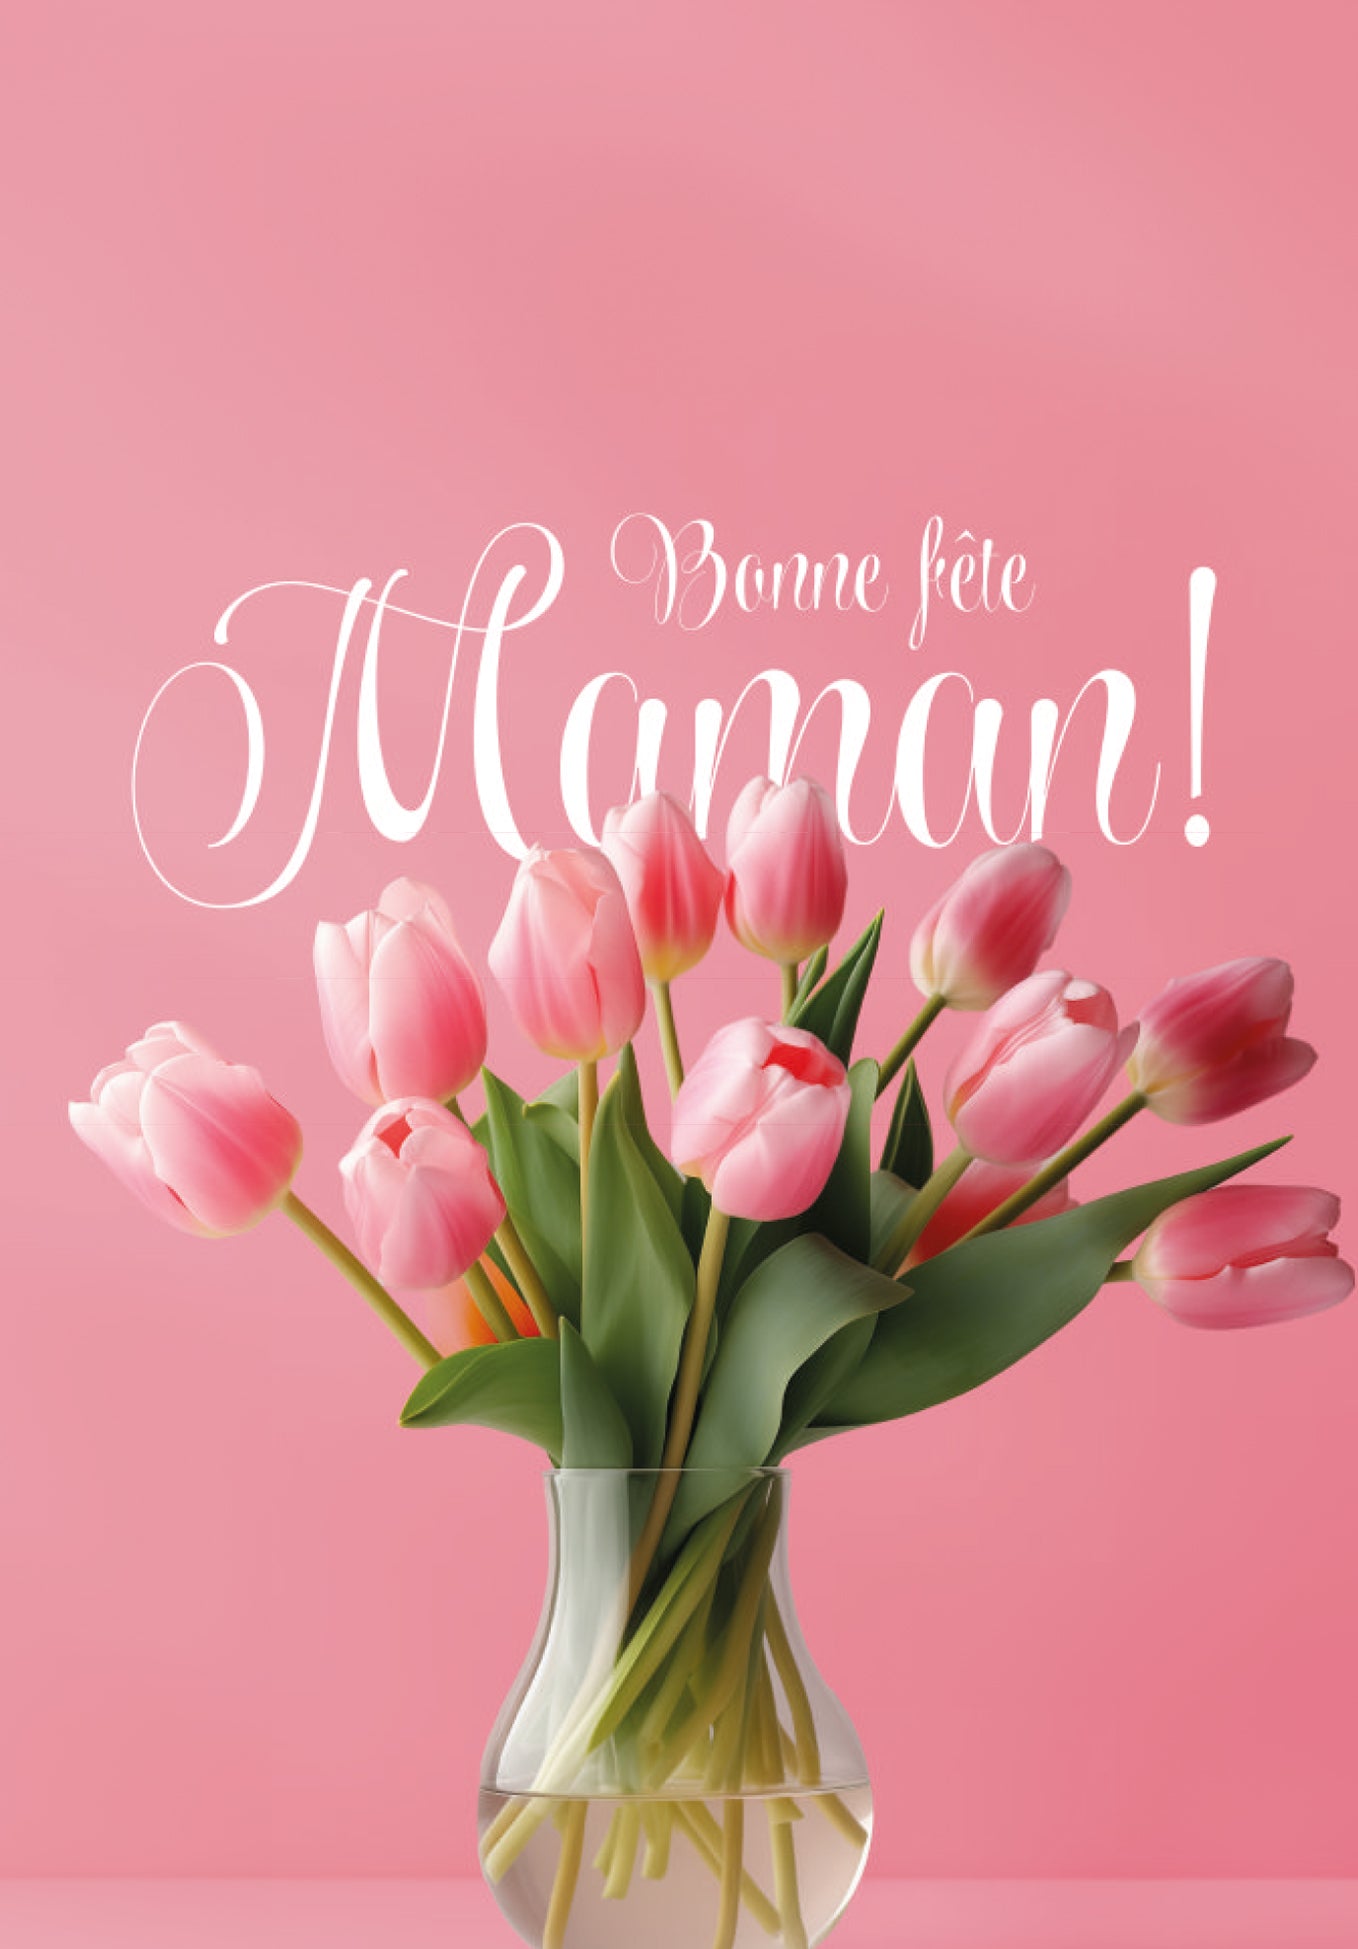 Bonne Fête maman - Vase tulipe